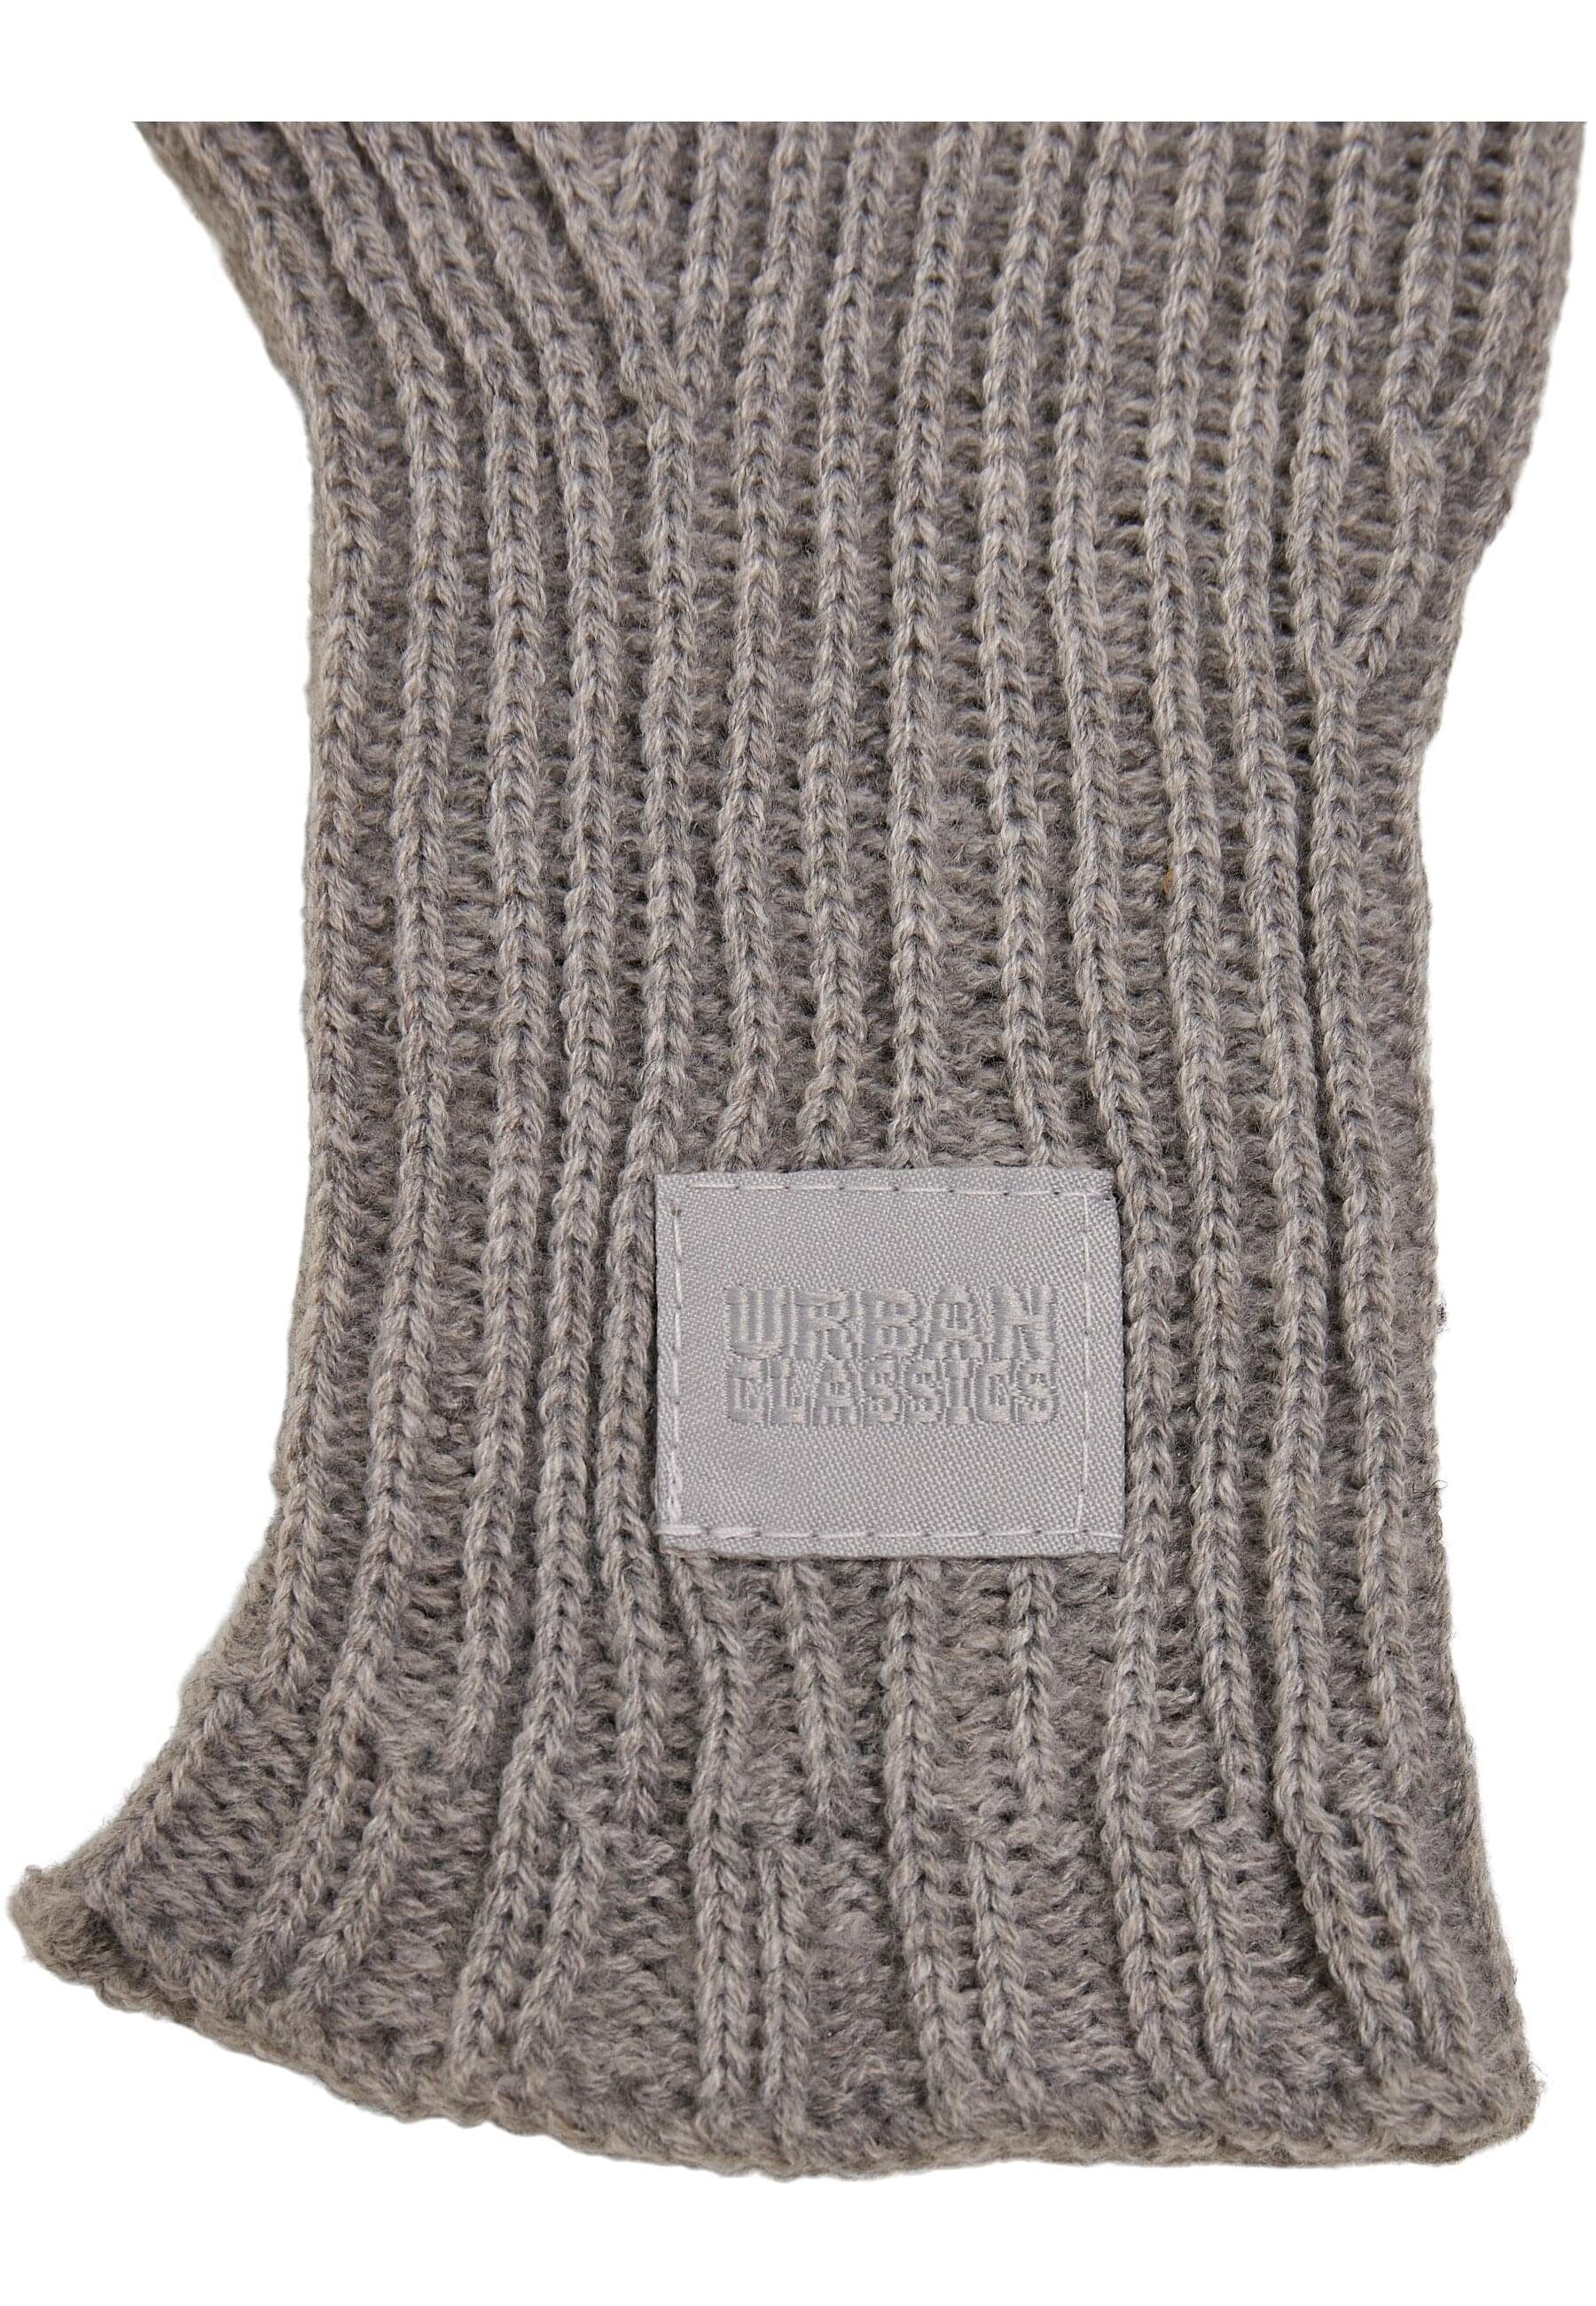 URBAN Smart CLASSICS Knitted Wool Baumwollhandschuhe heathergrey Gloves Unisex Mix